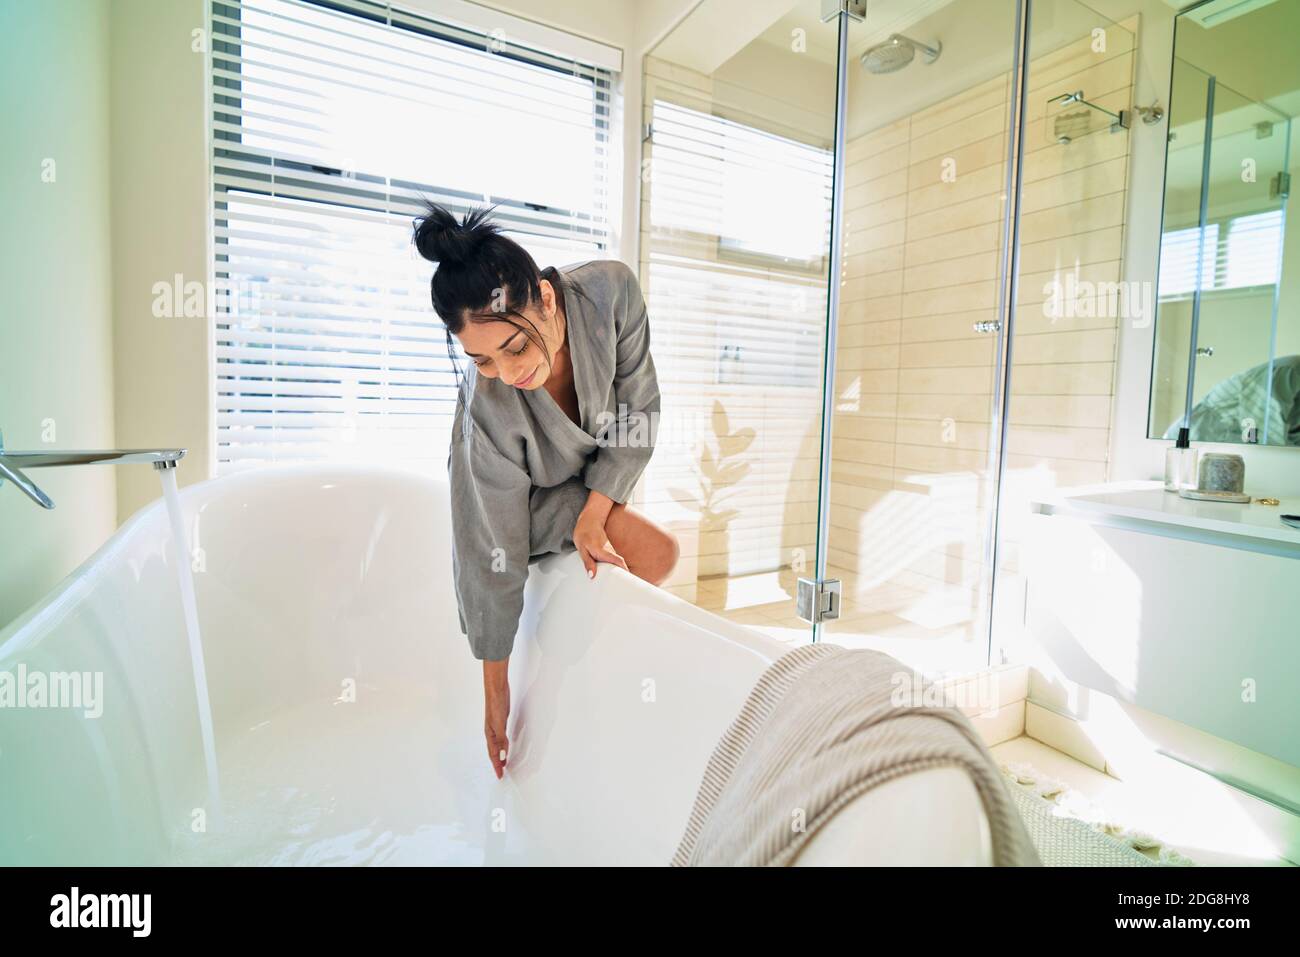 Woman in bathroom preparing soaking tub for bath in sunny bedroom Stock Photo